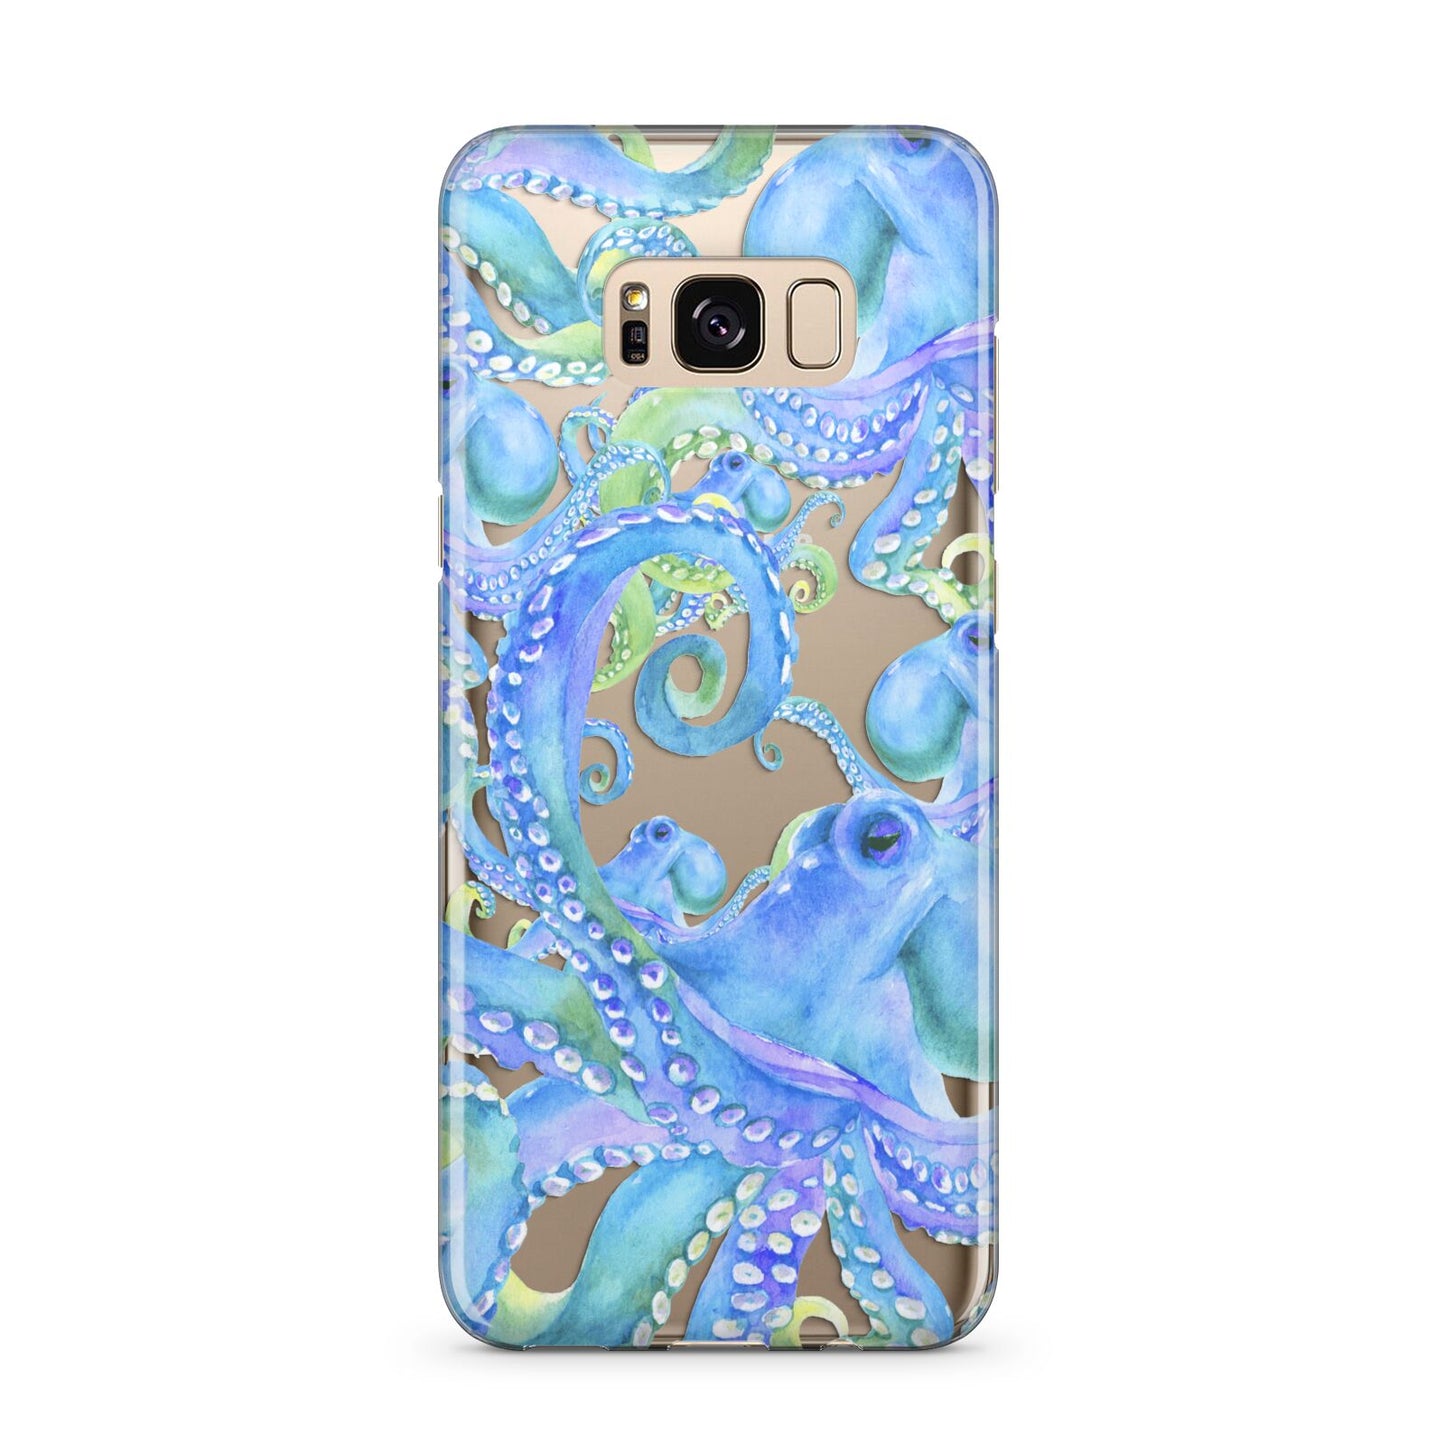 Octopus Samsung Galaxy S8 Plus Case